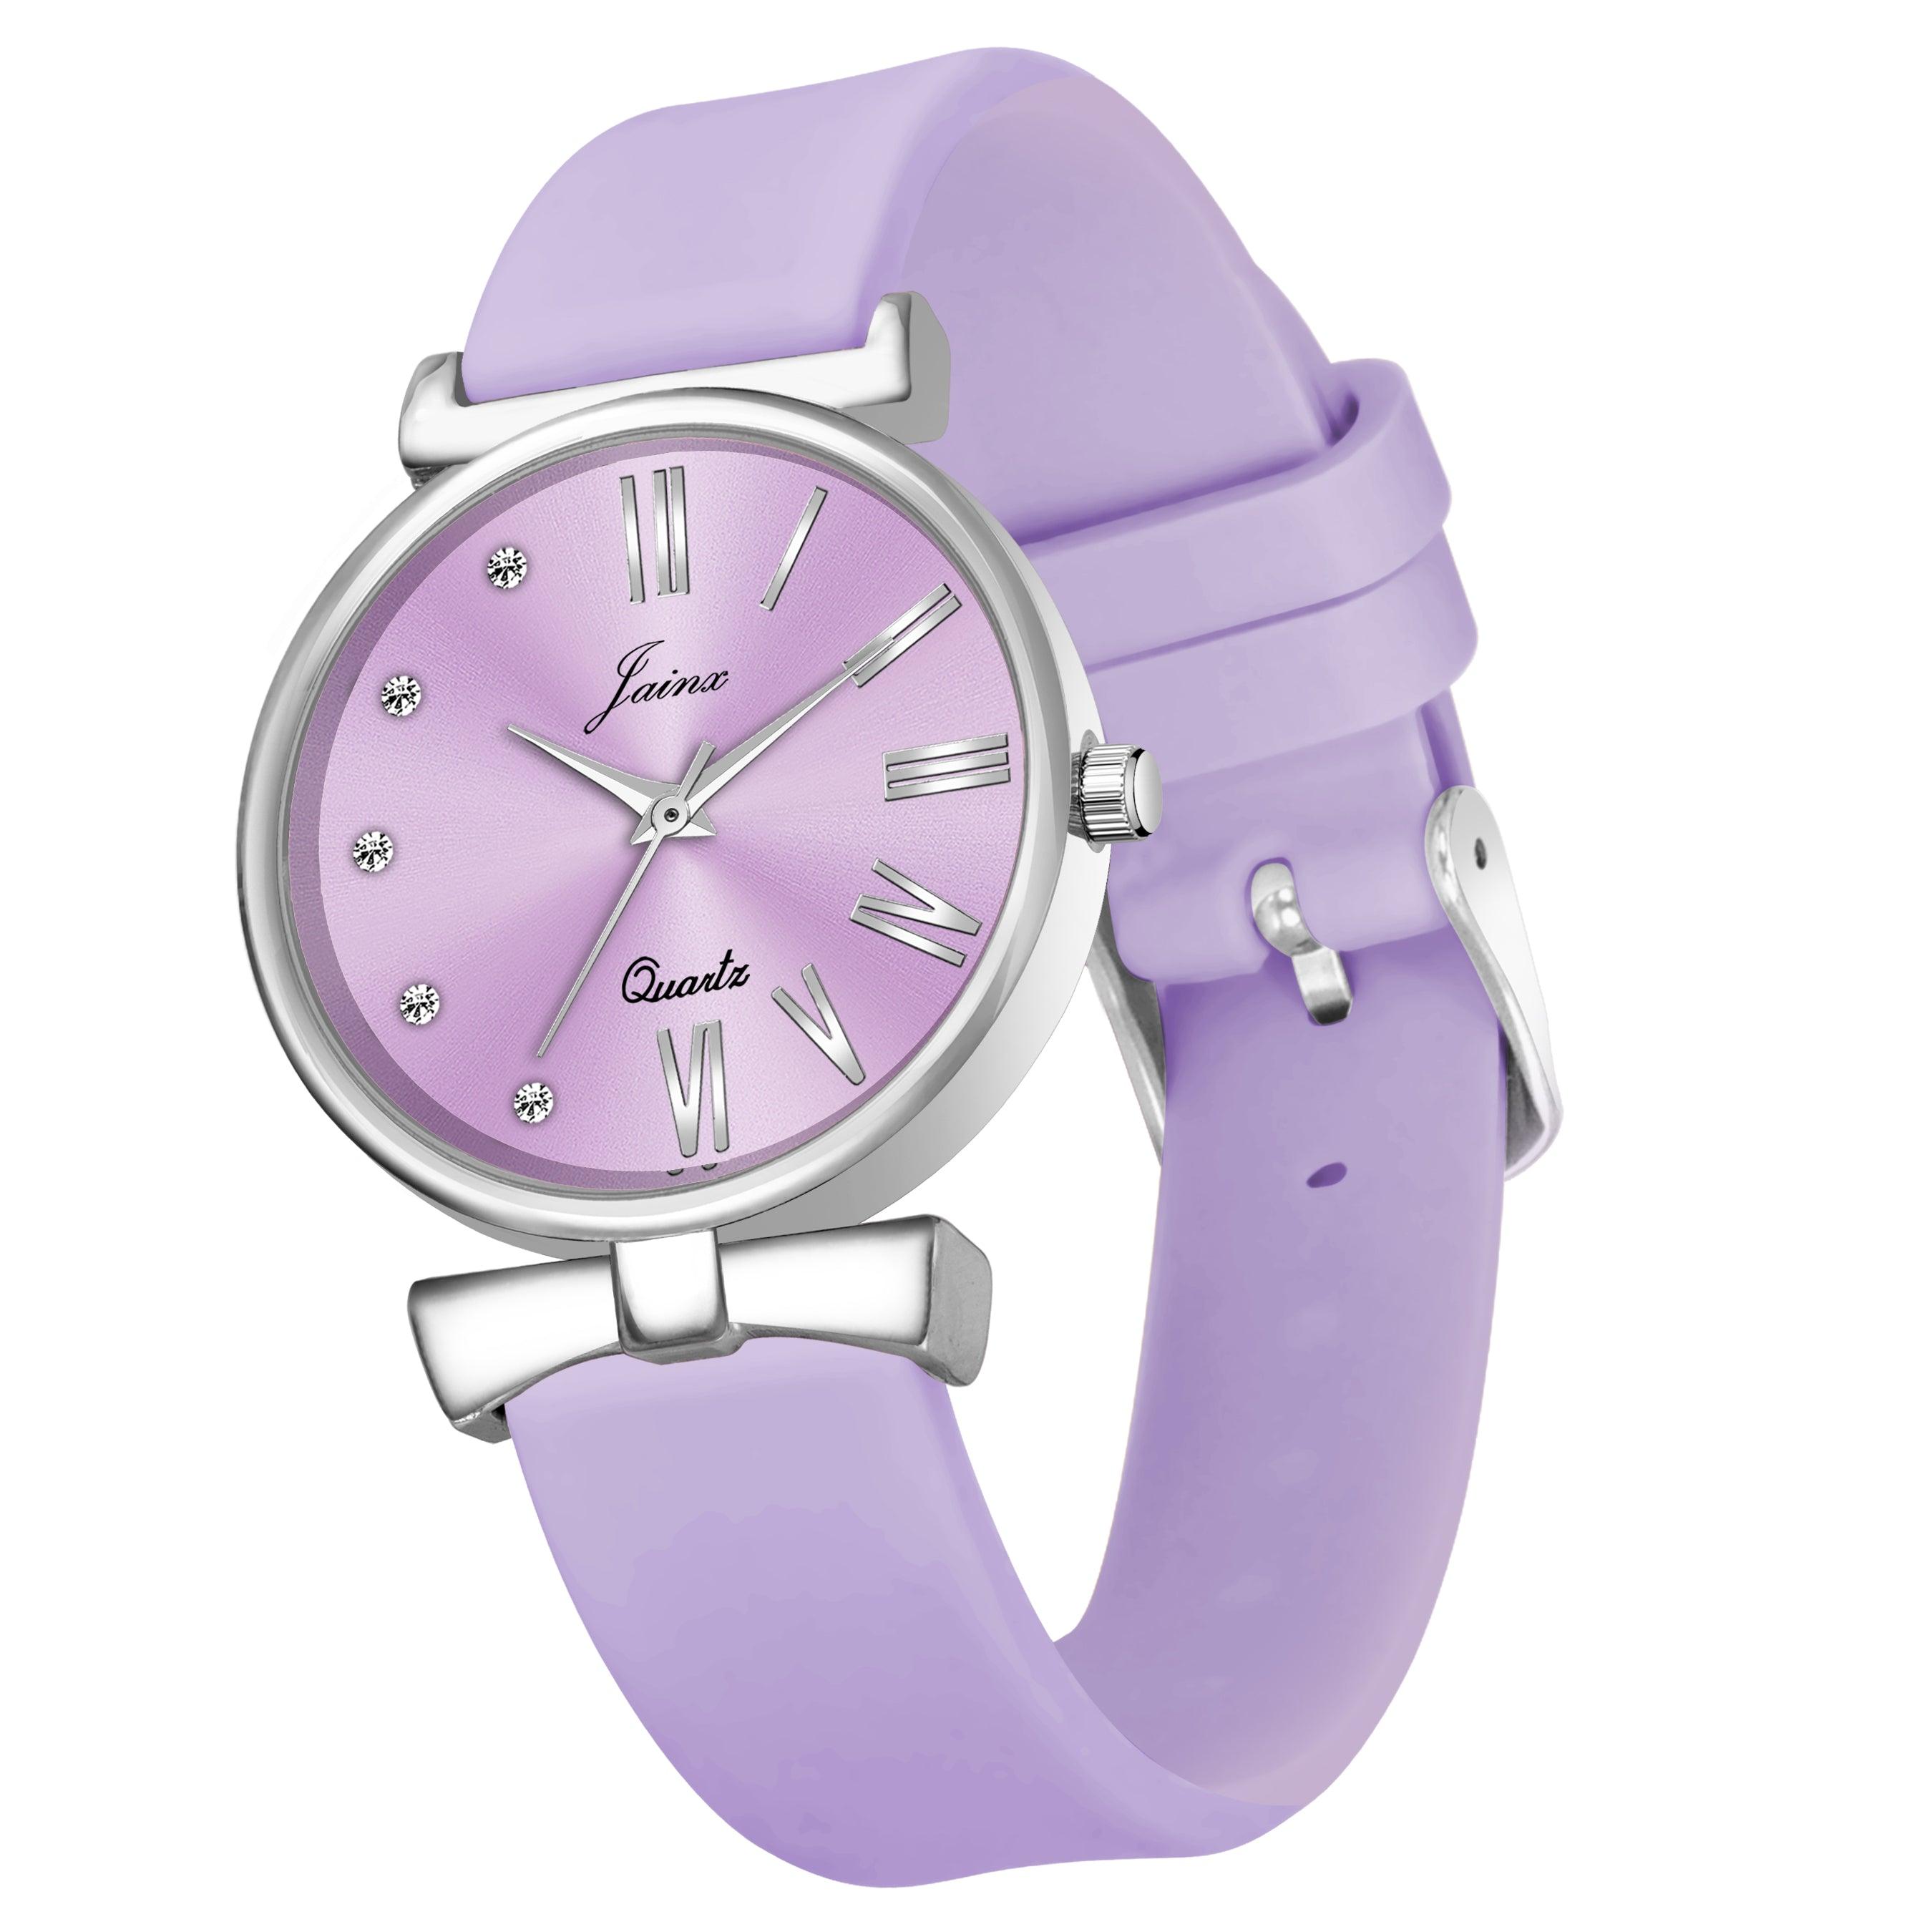 Jainx Purple Silicone Band Analog Wrist Watch for Women - JW8560 - Jainx Store